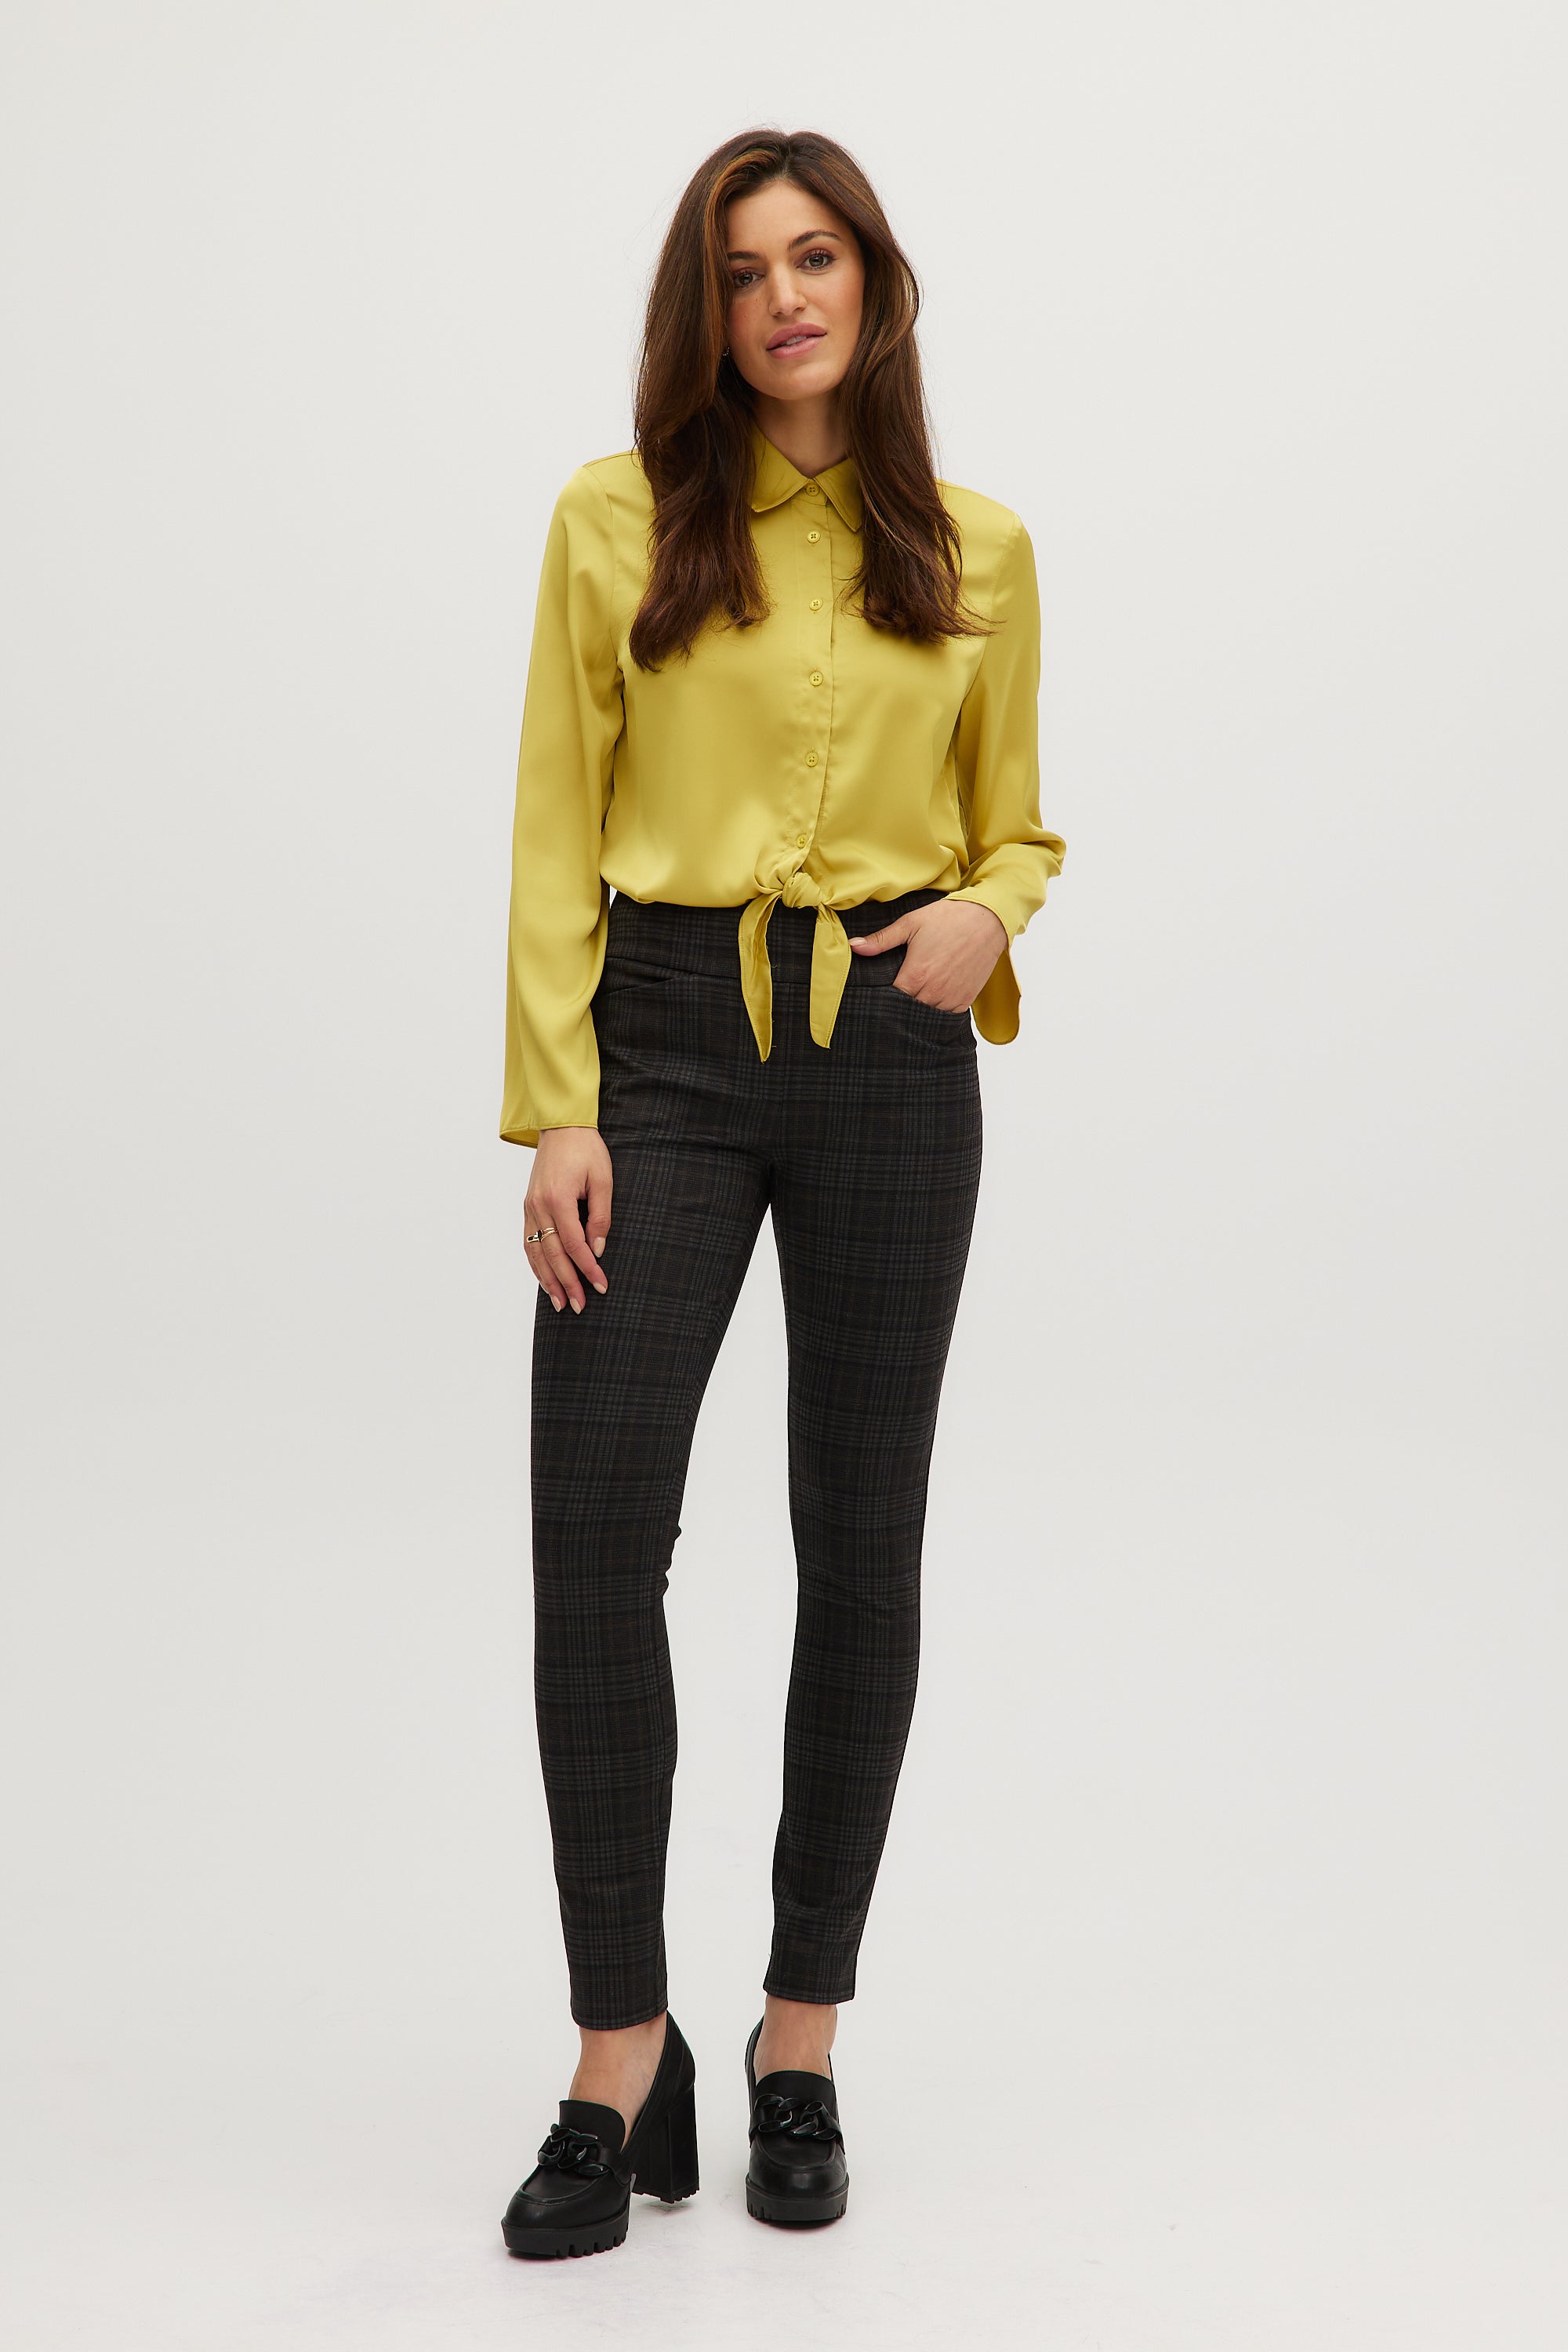 Buy Cotton Viscose Straight Pants- Bumble Bee Yellow by Designer ABHISHTI  for Women online at Kaarimarket.com